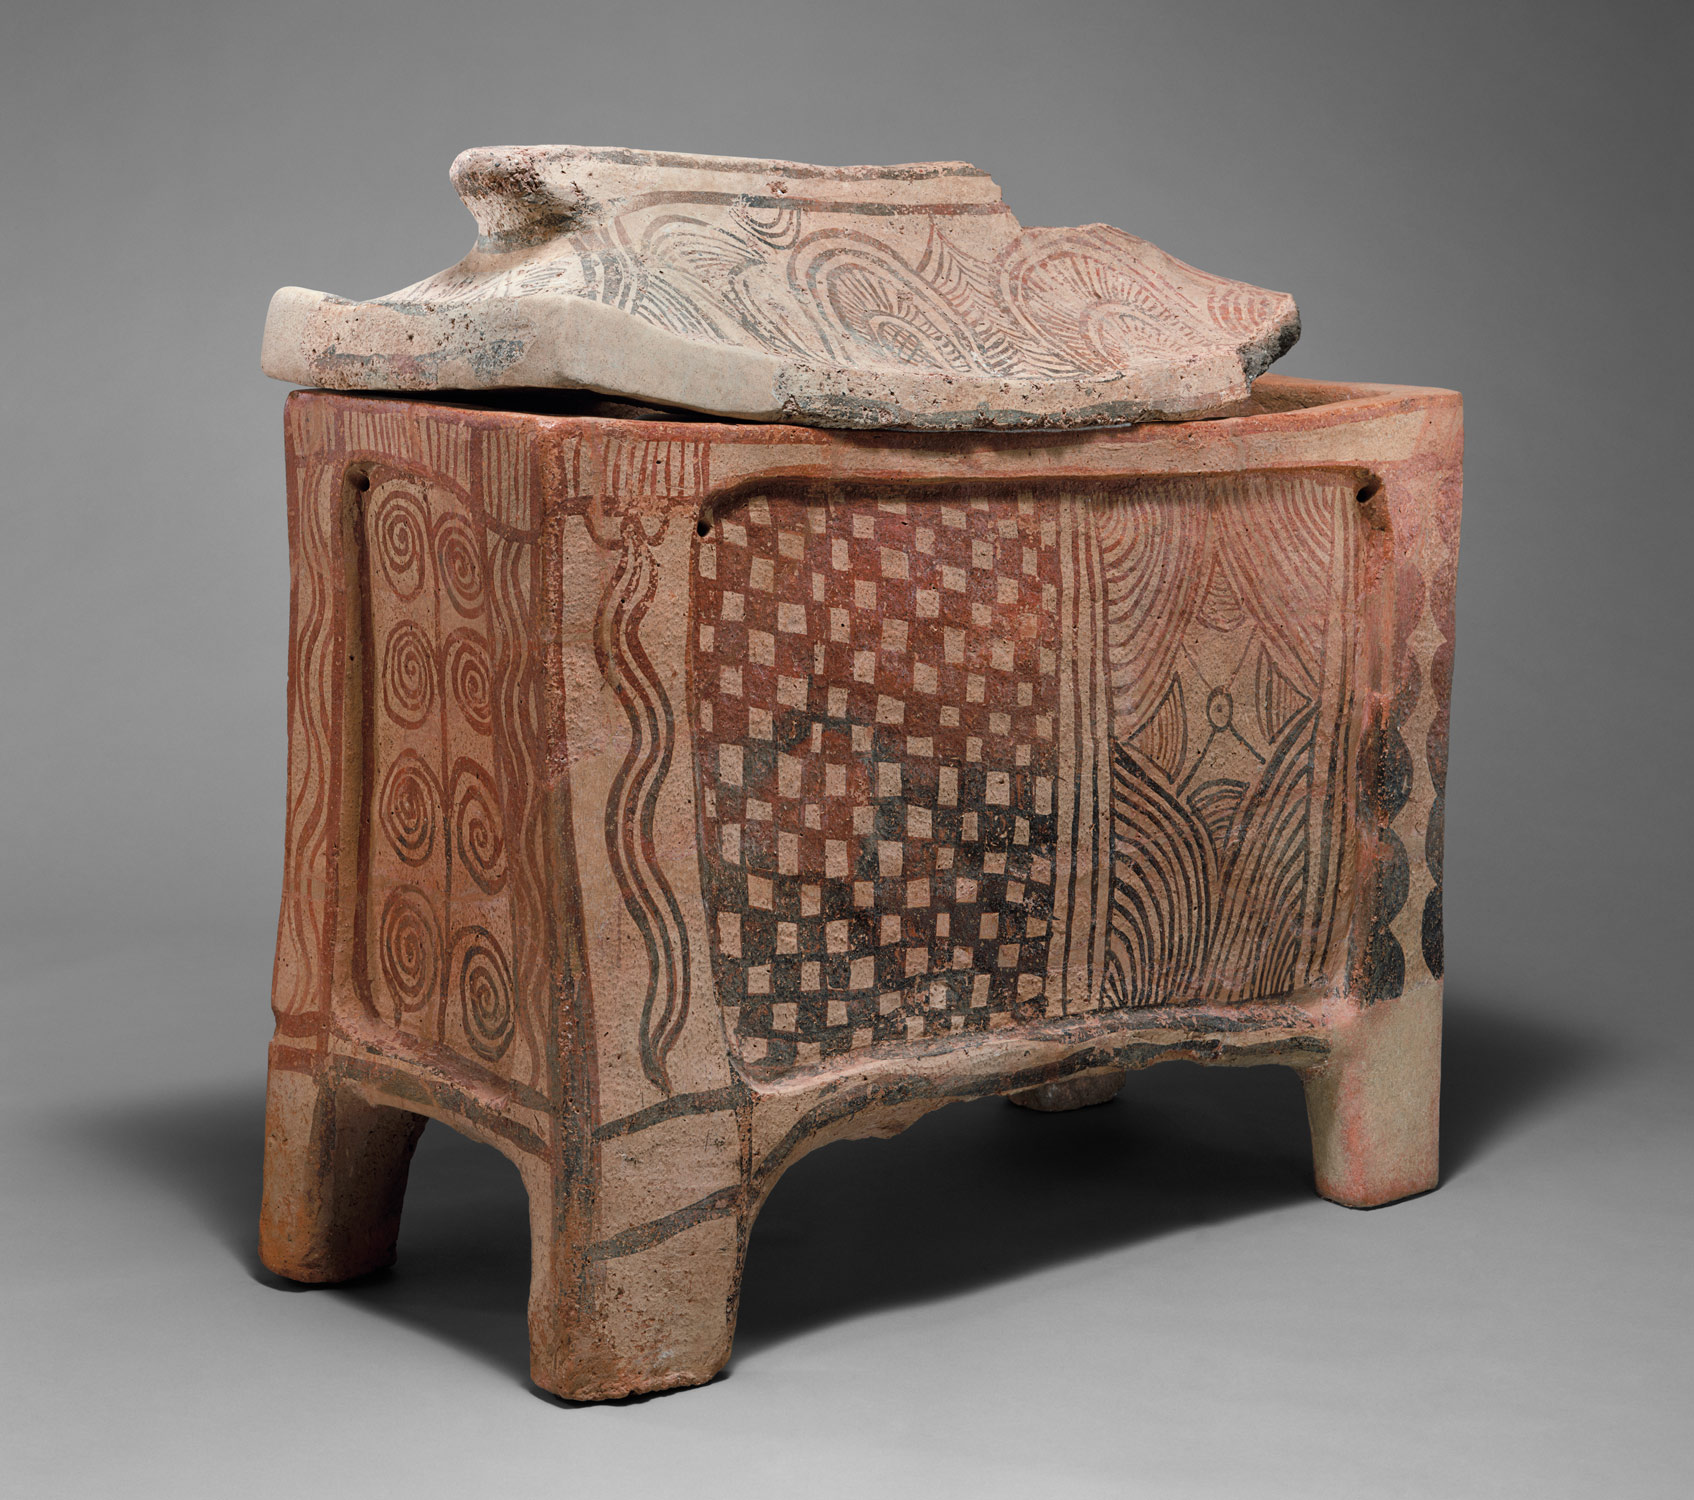 Terracotta larnax (chest-shaped coffin)